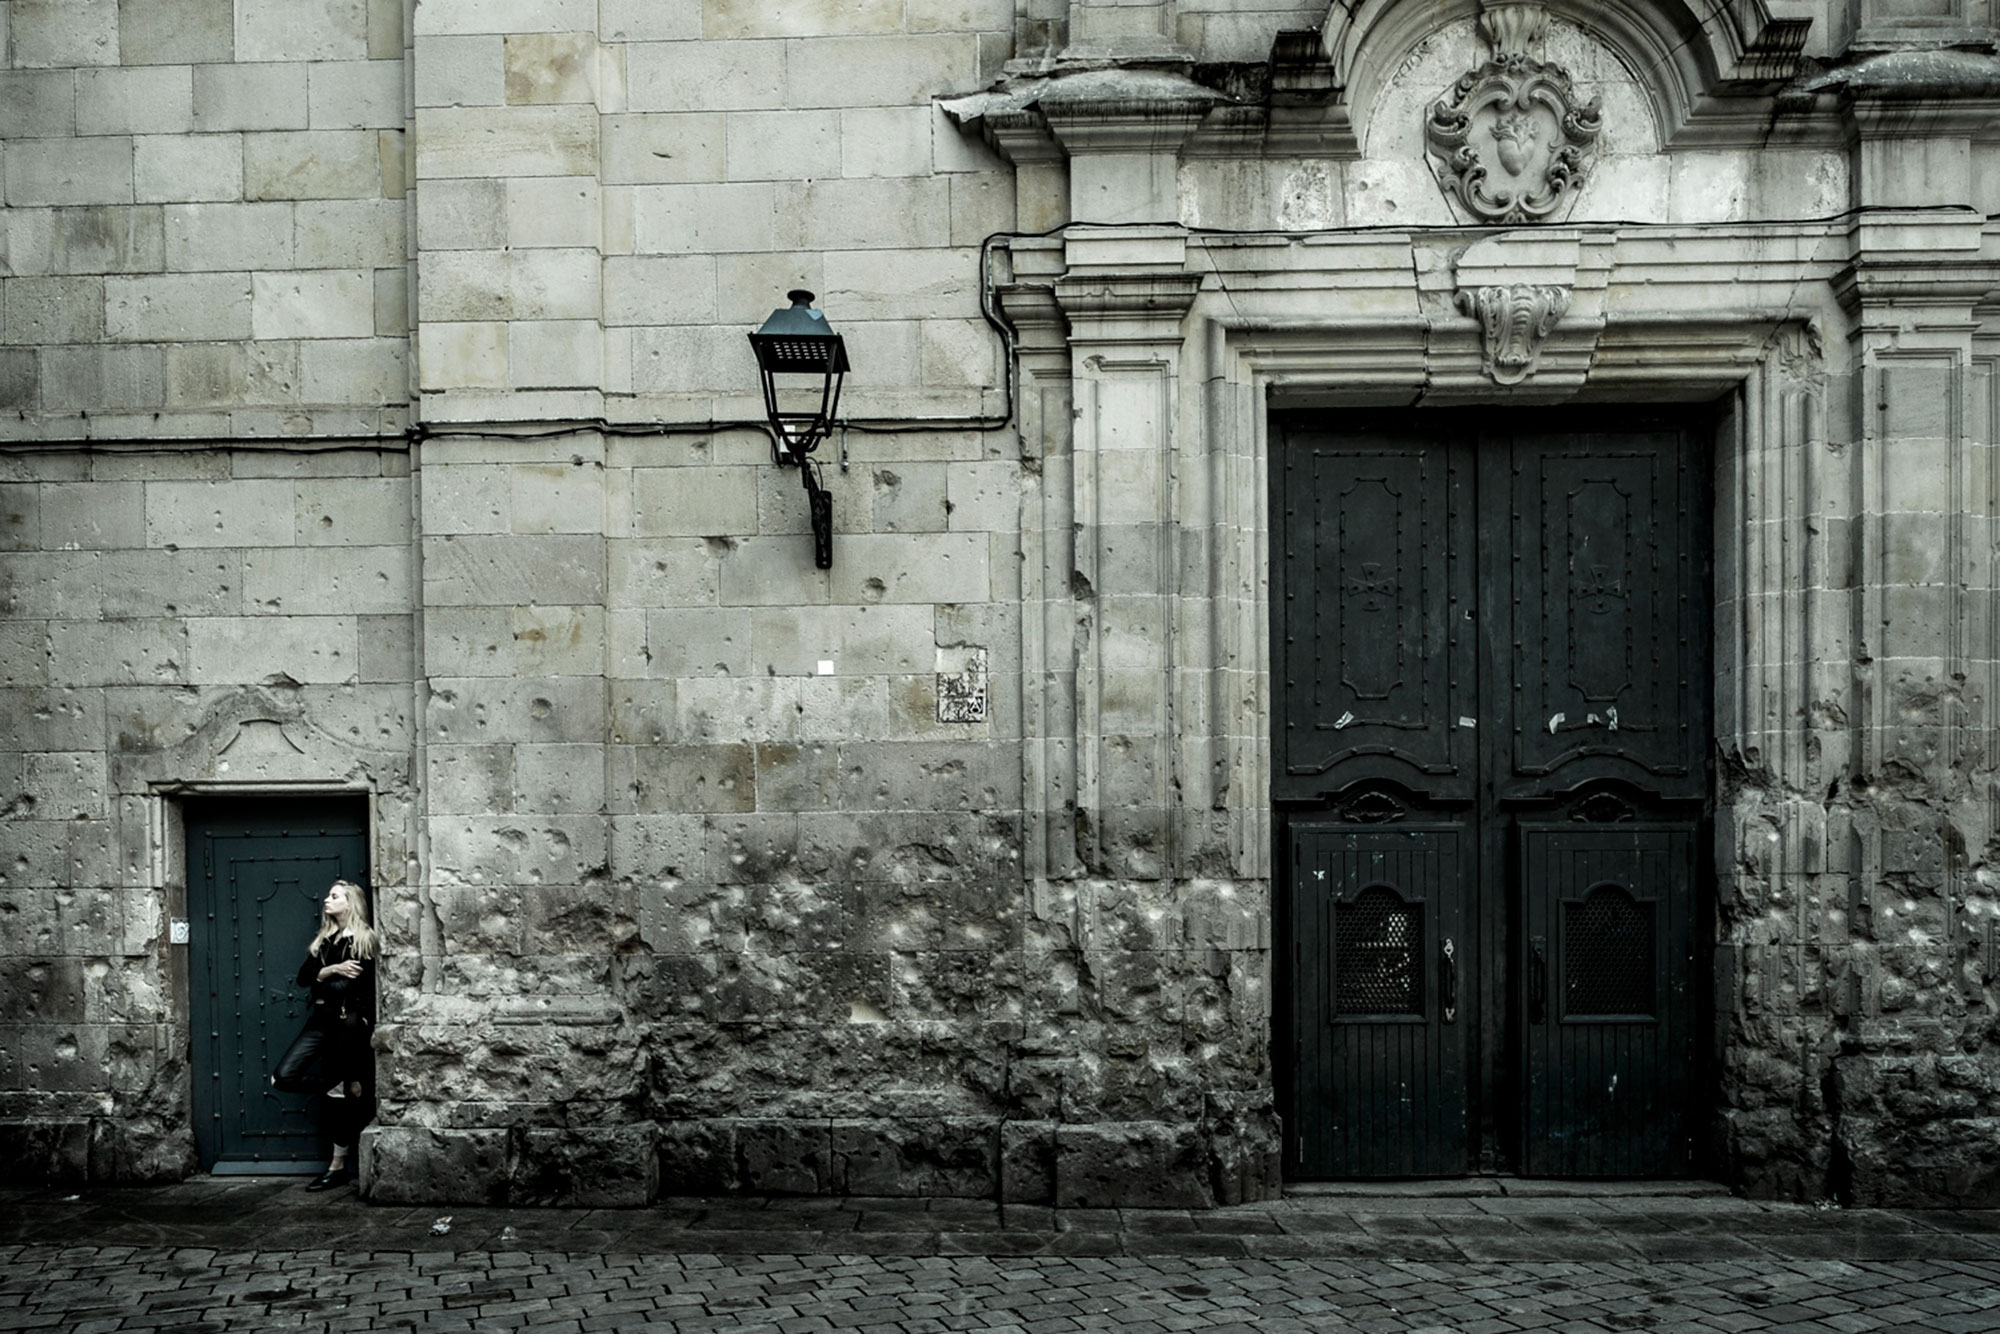 Street Photography Workshops Barcelona